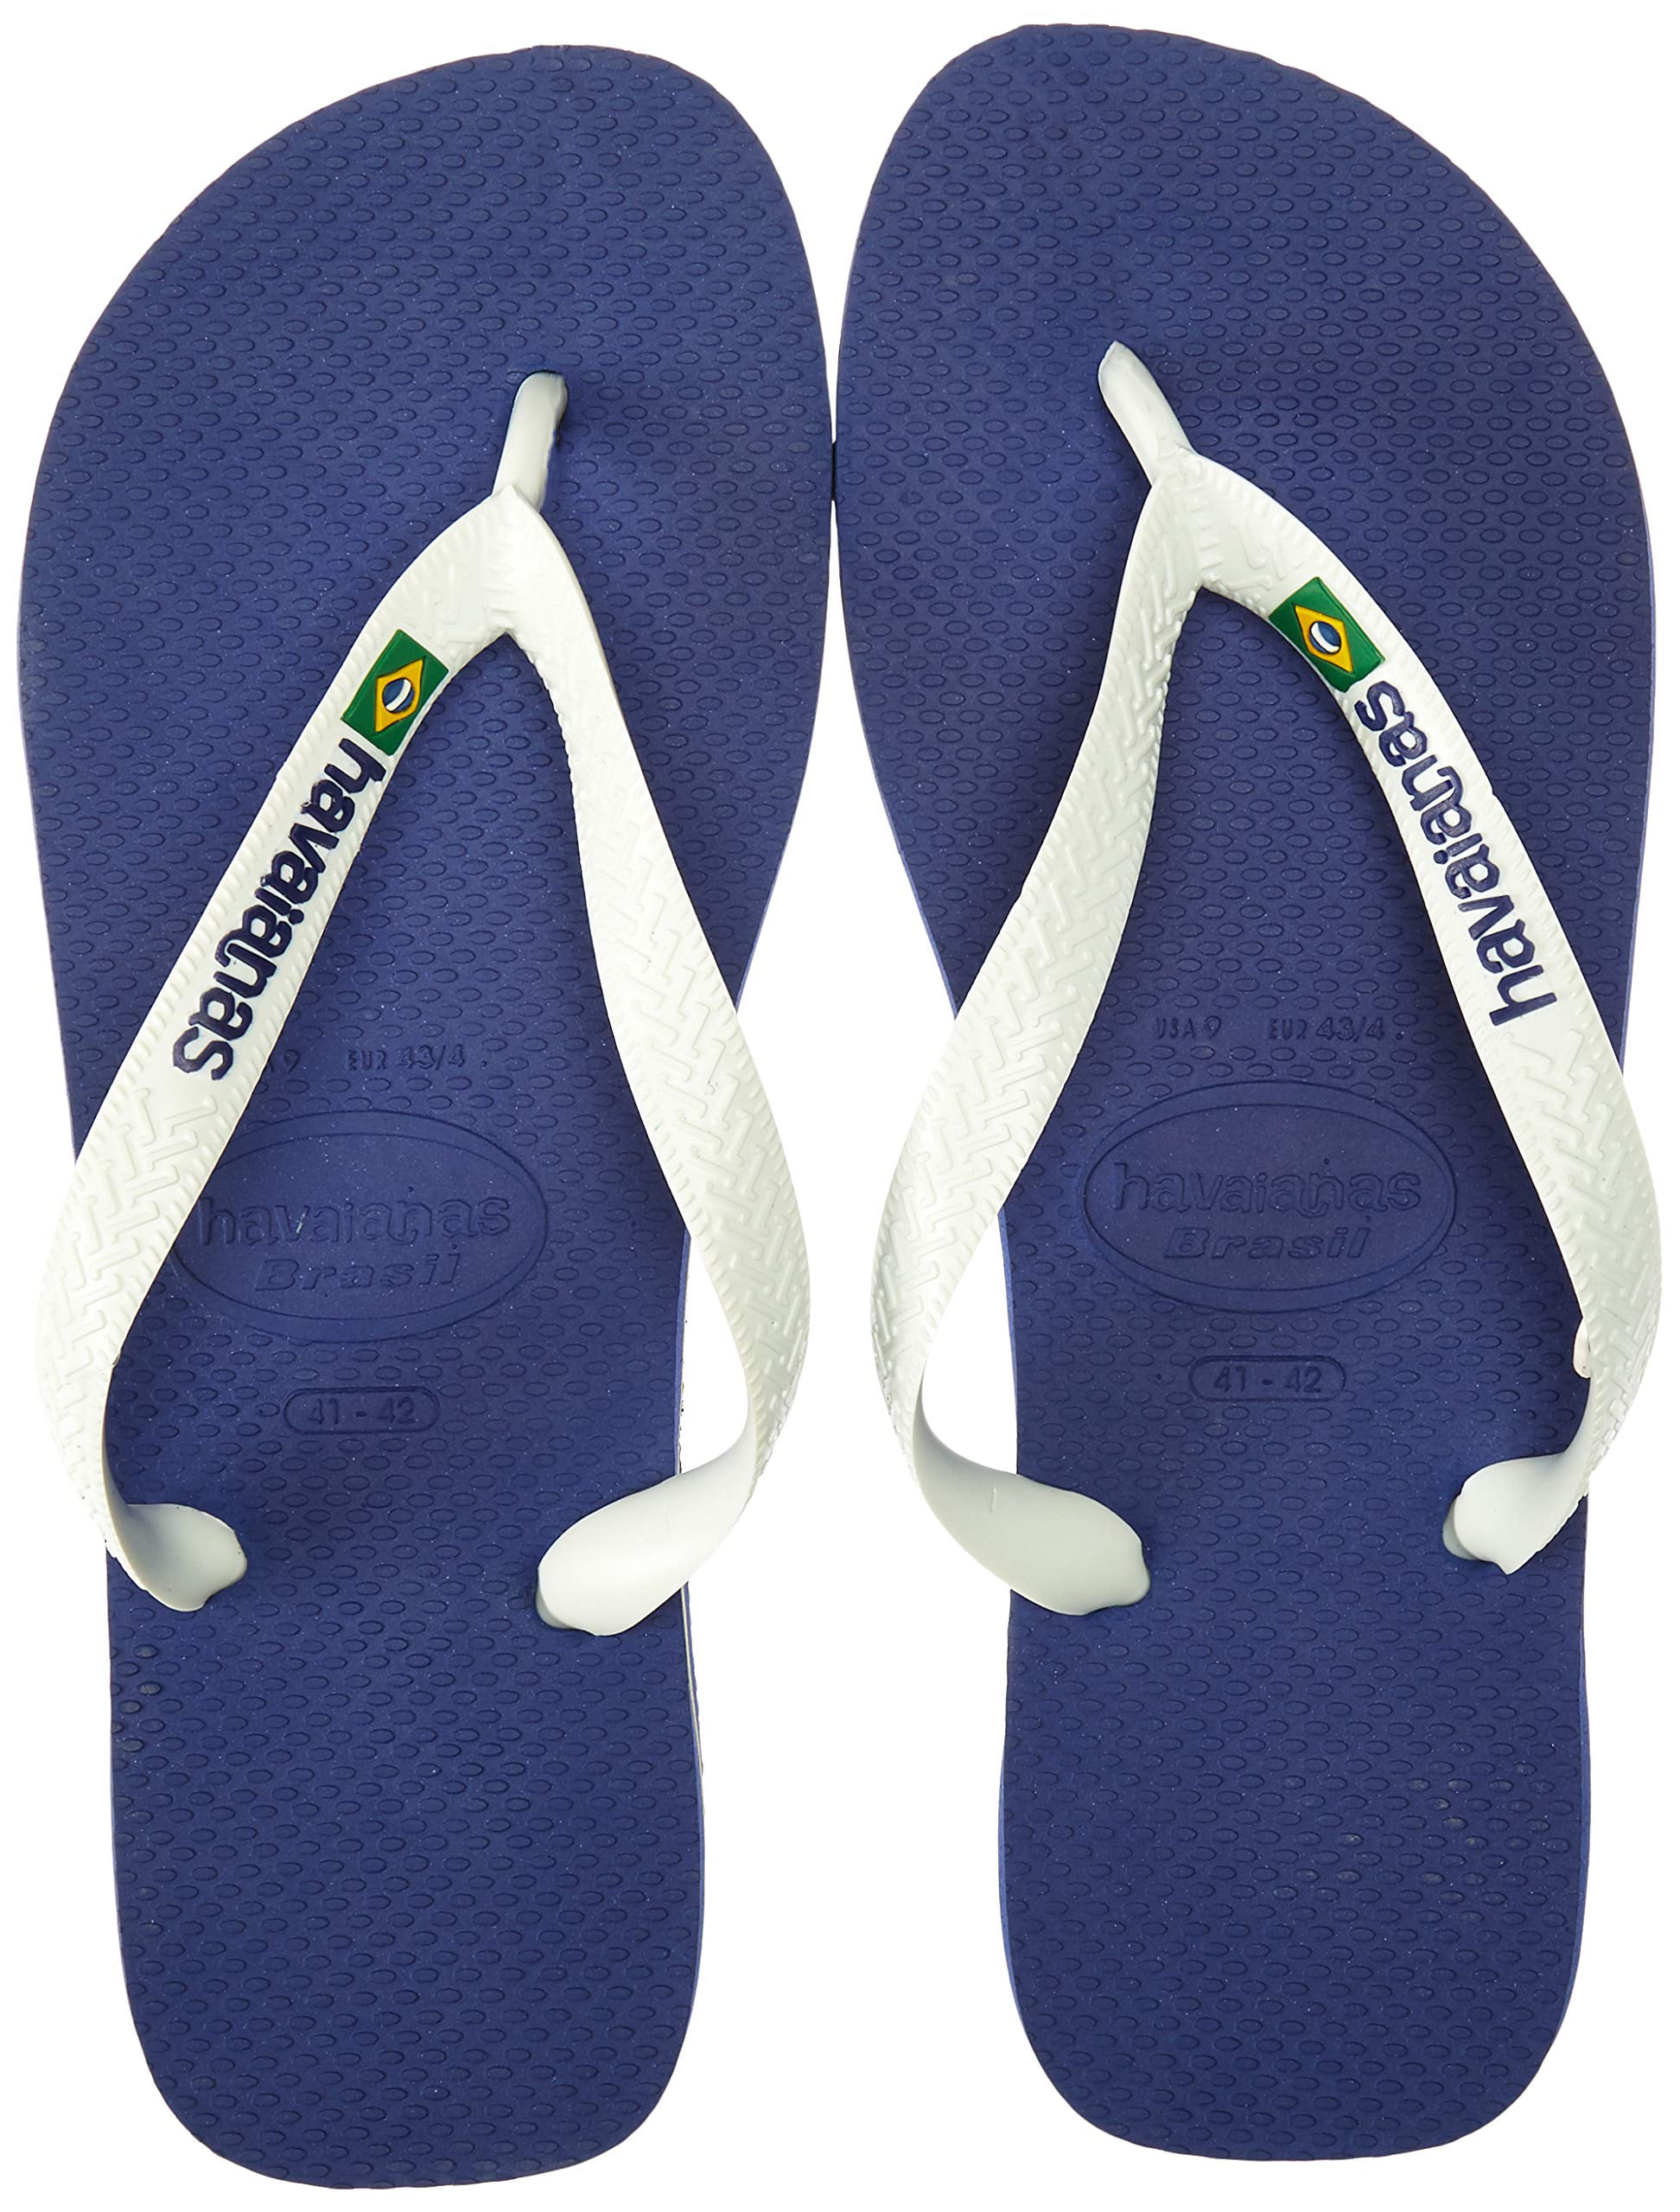 Ladies Havaianas Top Rubber Casual Slip On Sandals Brasil Flip Flops All Sizes 